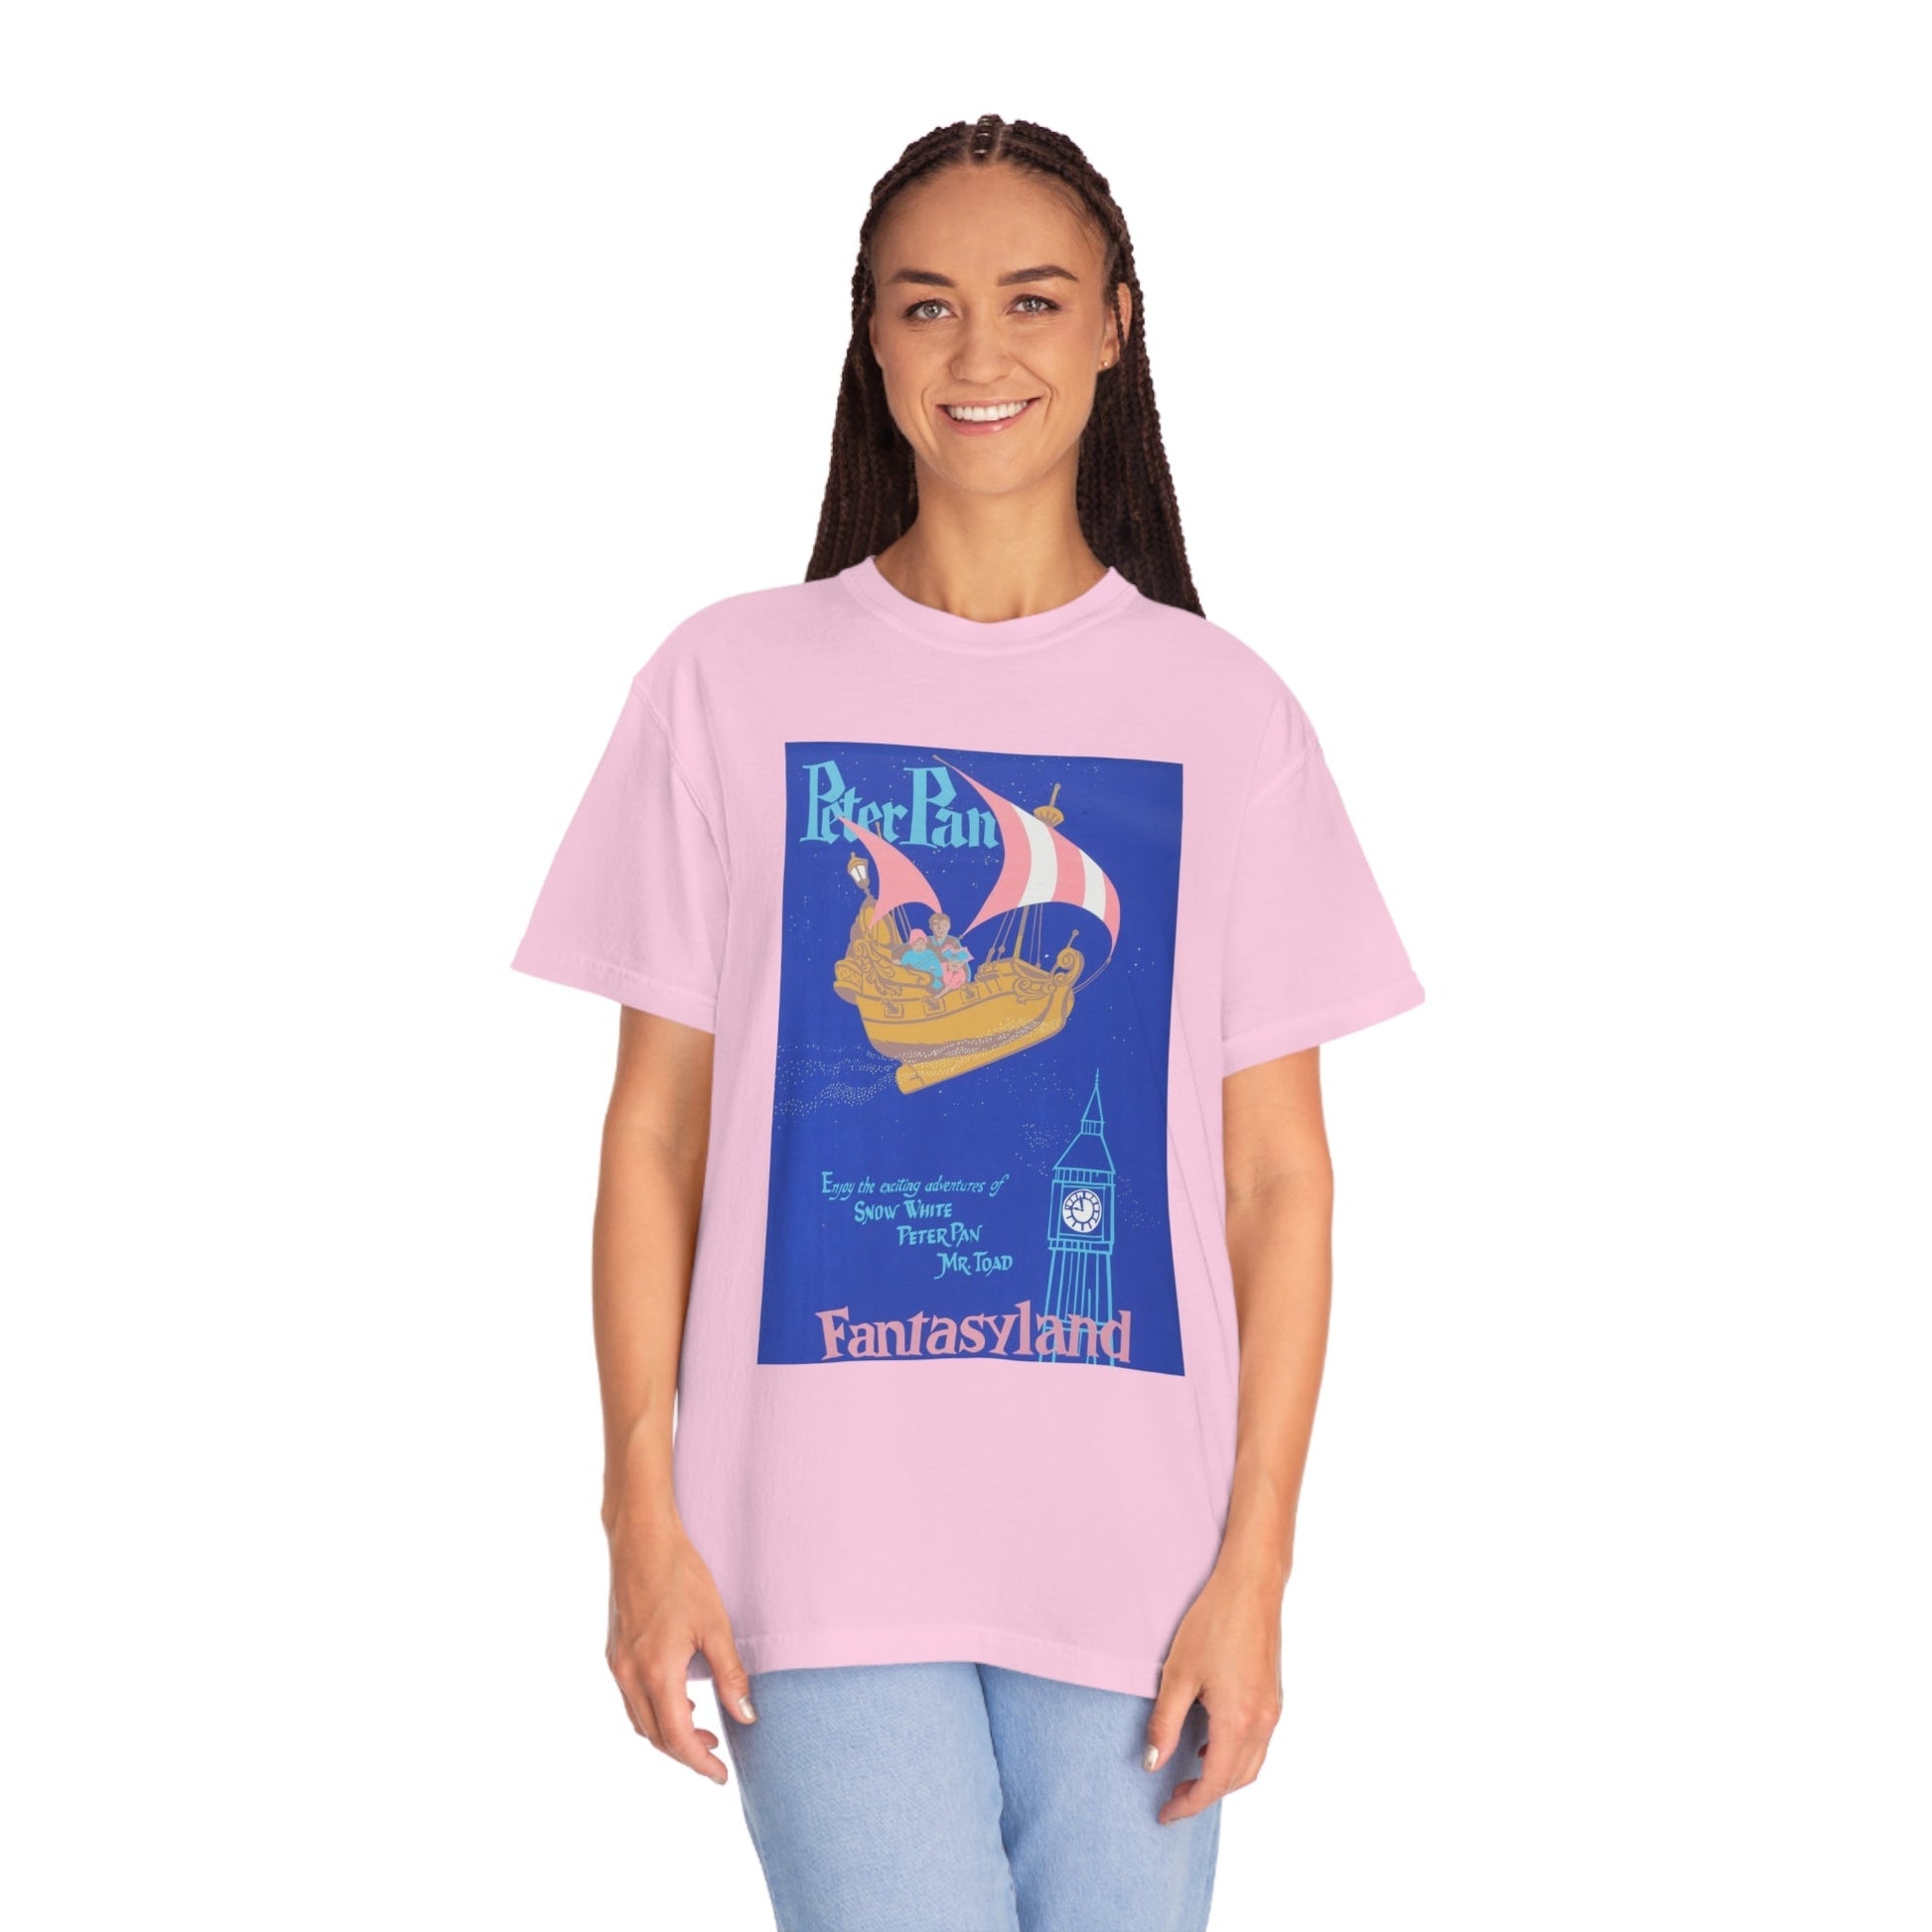 Peter Pan's Flight Disneyland t-shirt